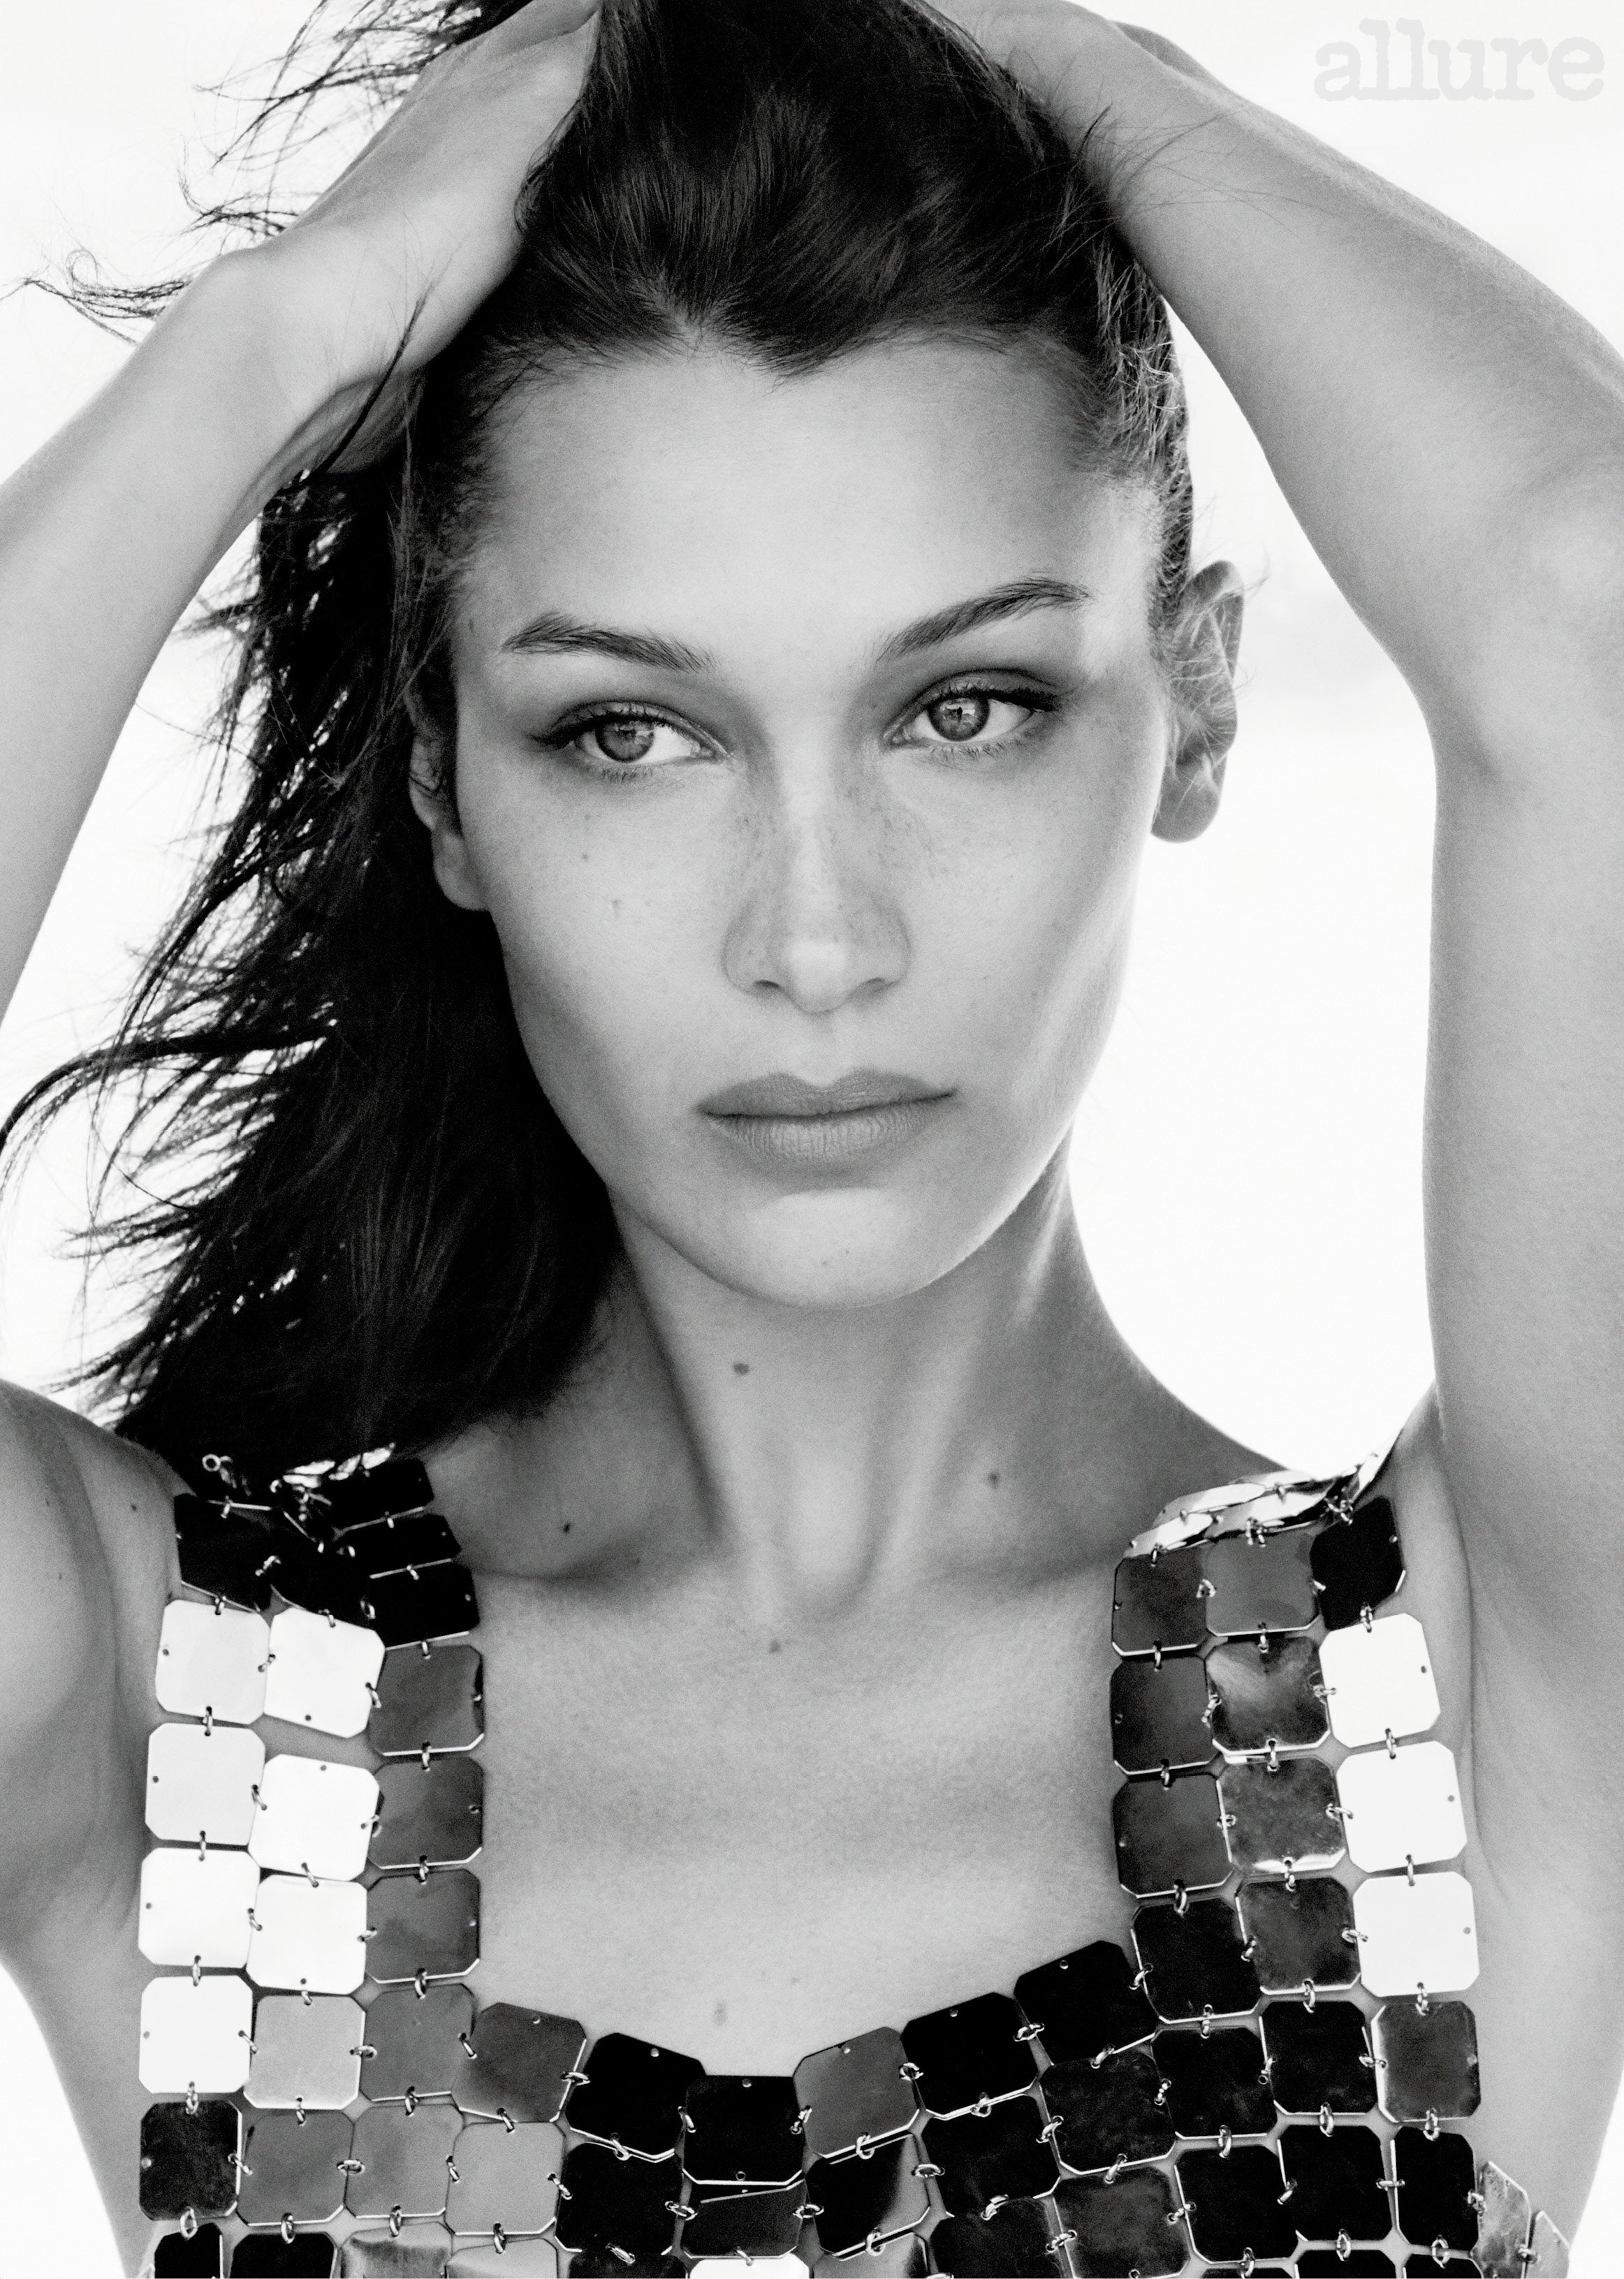 Bella Hadid - Model Profile - Photos & latest news